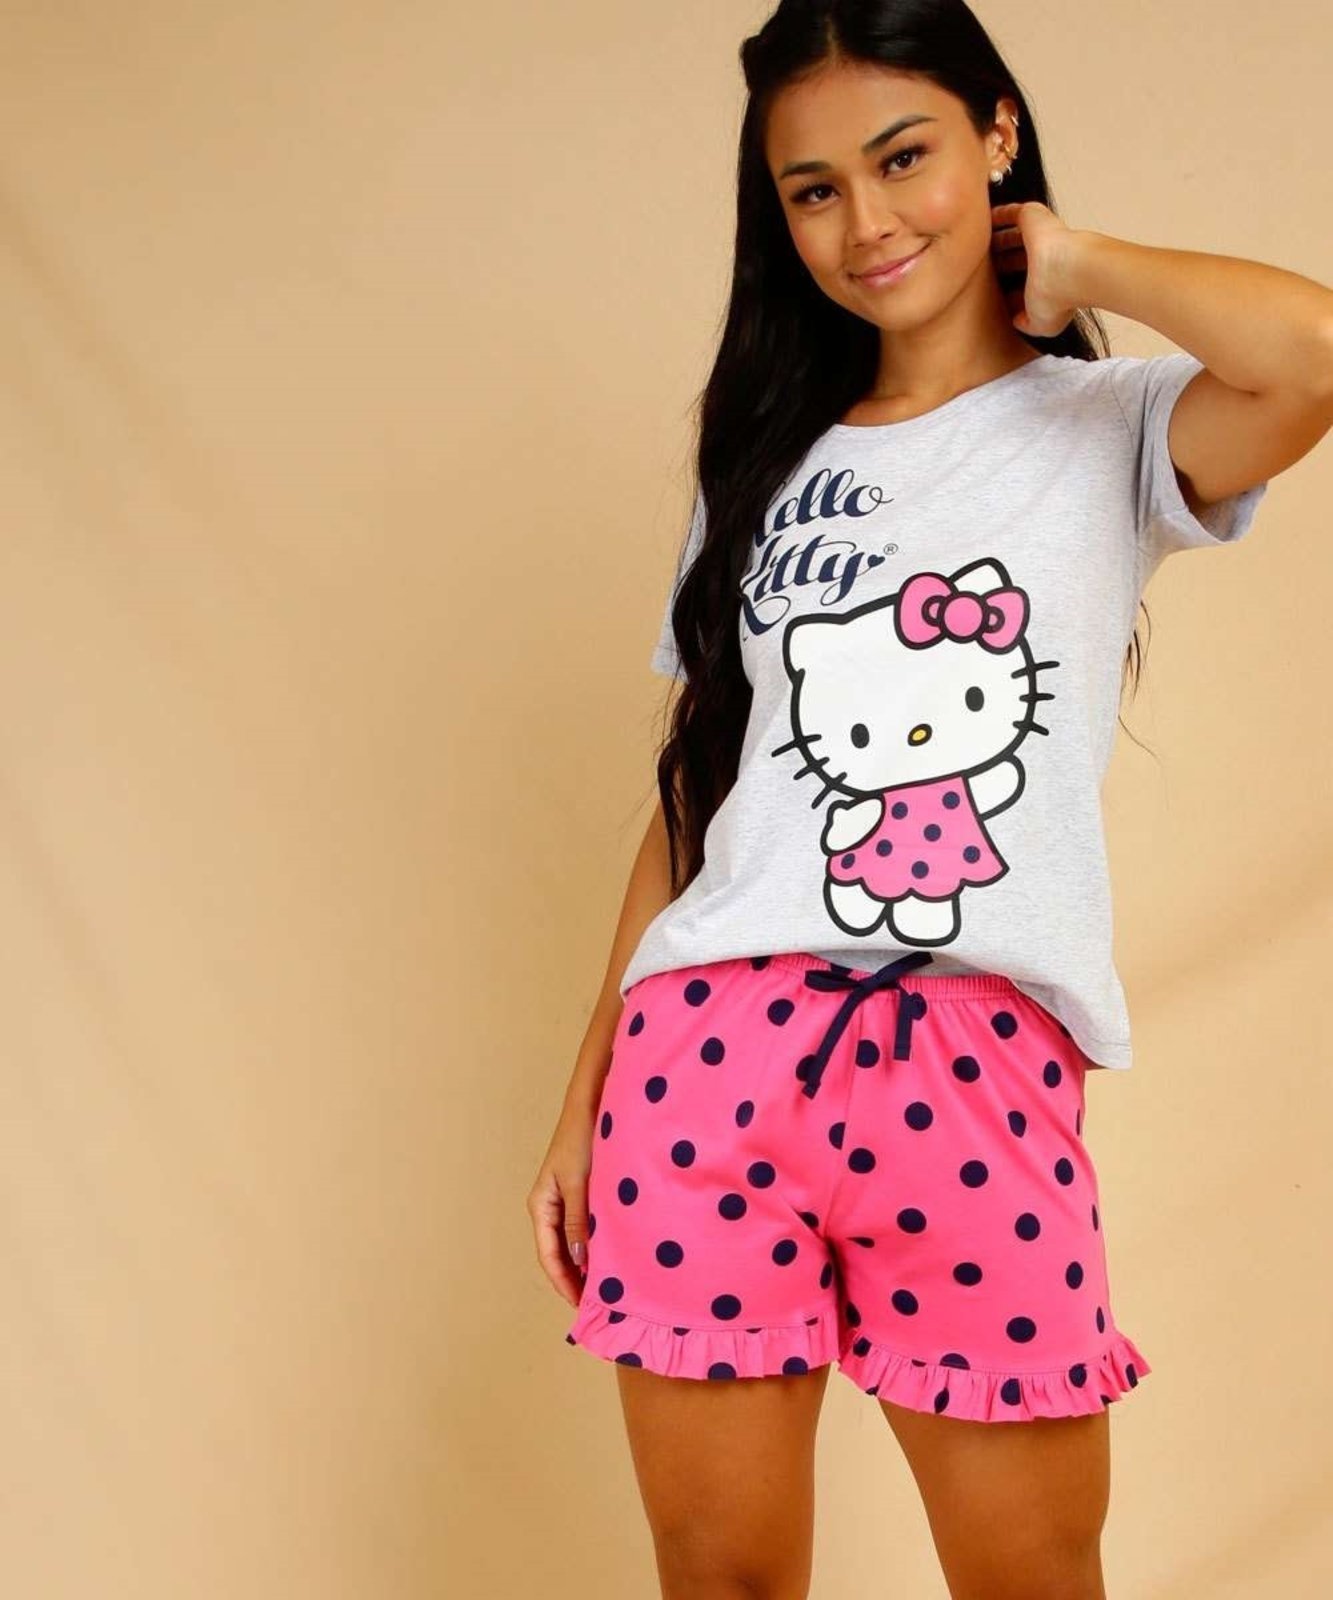 Preços baixos em Calcinhas Hello Kitty Hello Kitty Rosa para mulheres